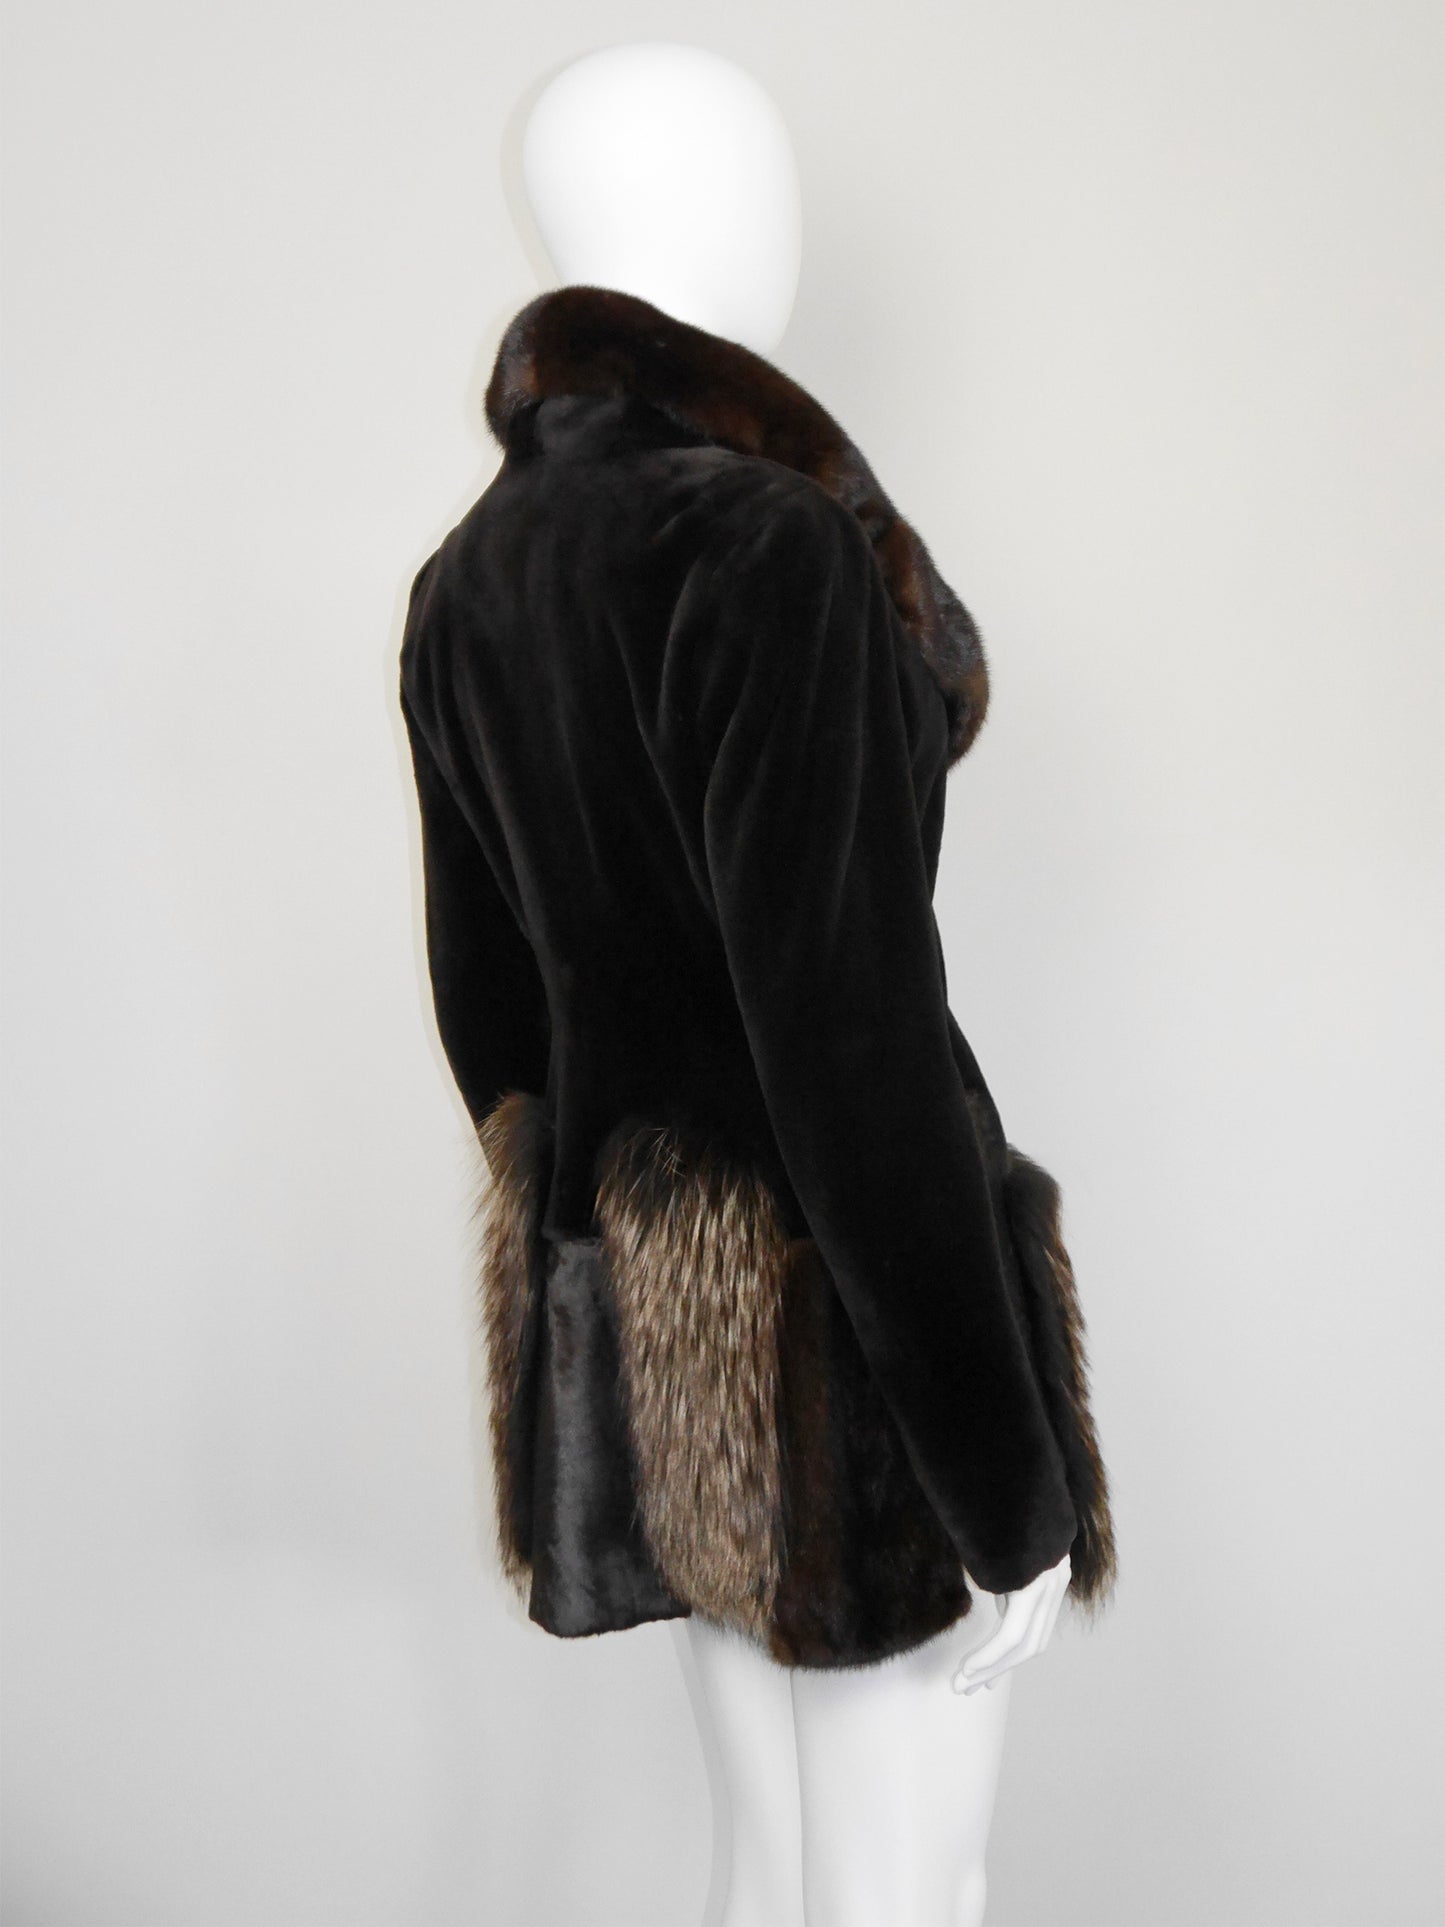 GIANFRANCO FERRÉ 2000s Vintage Sheared Mink Fur Jacket w/ Sculpted Collar Size XS-S